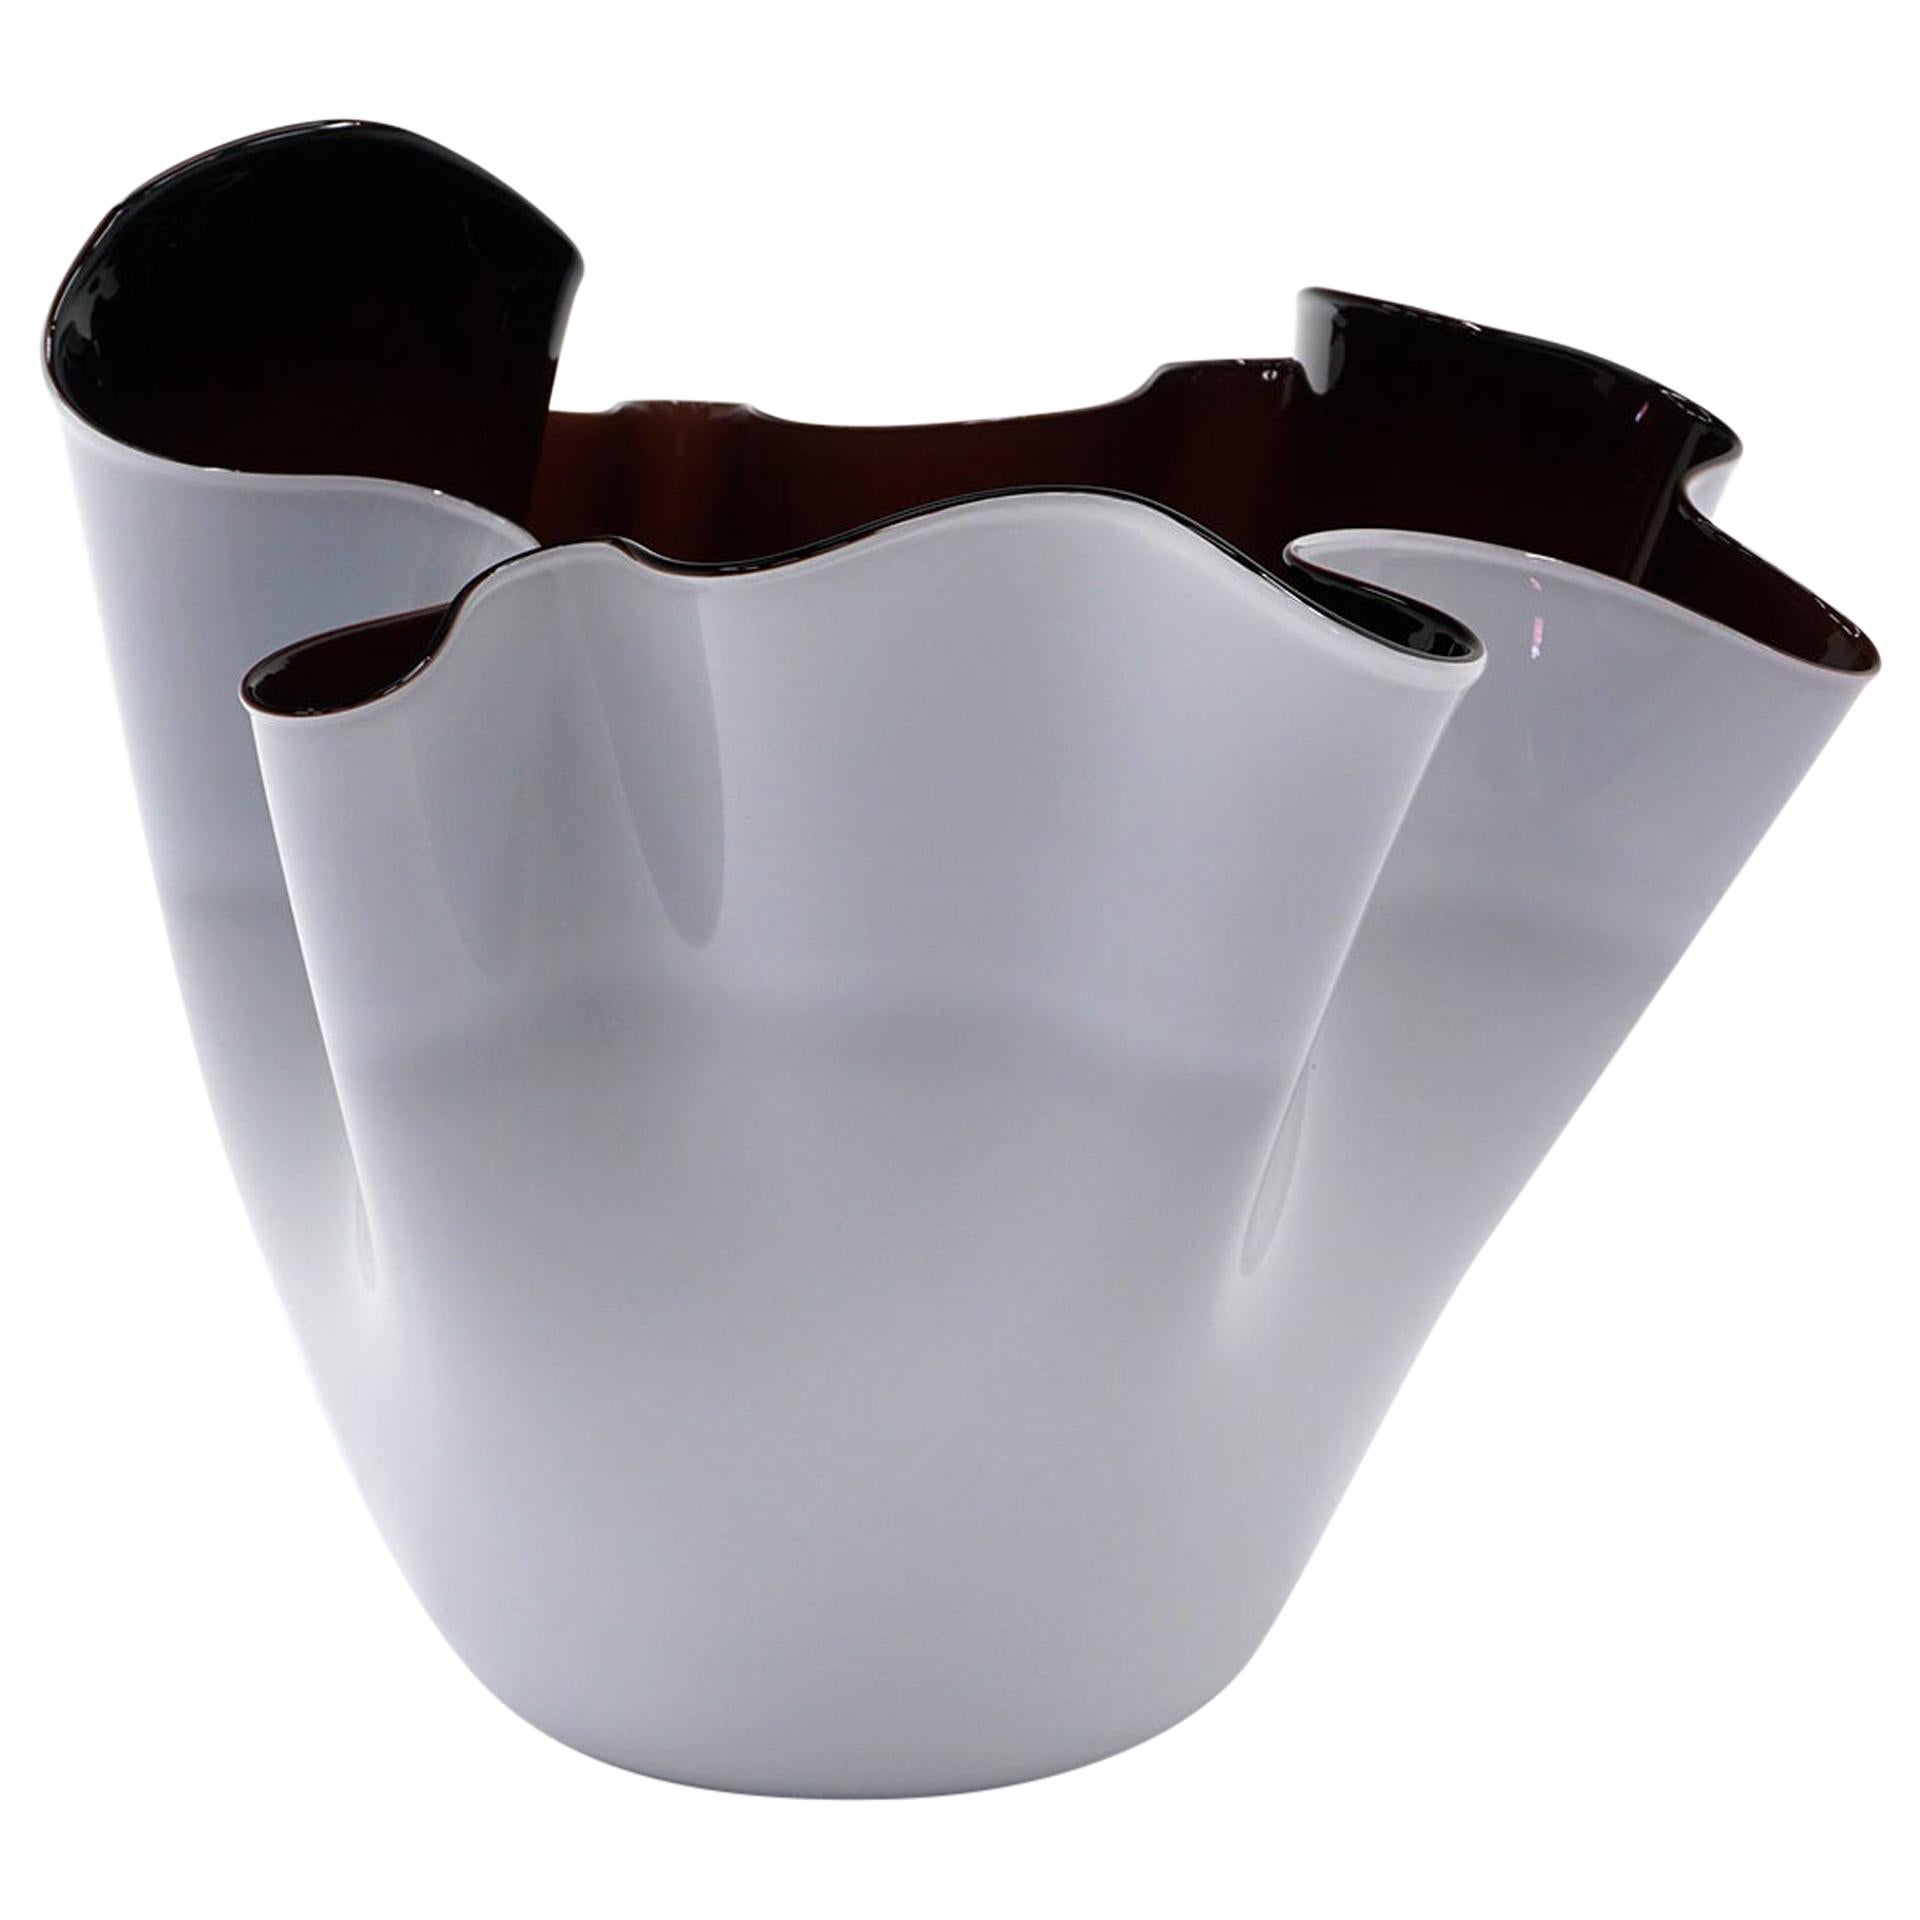 Large Venini Hankerchief Artglass / Glass Bowl / Vase, Almost Black and White